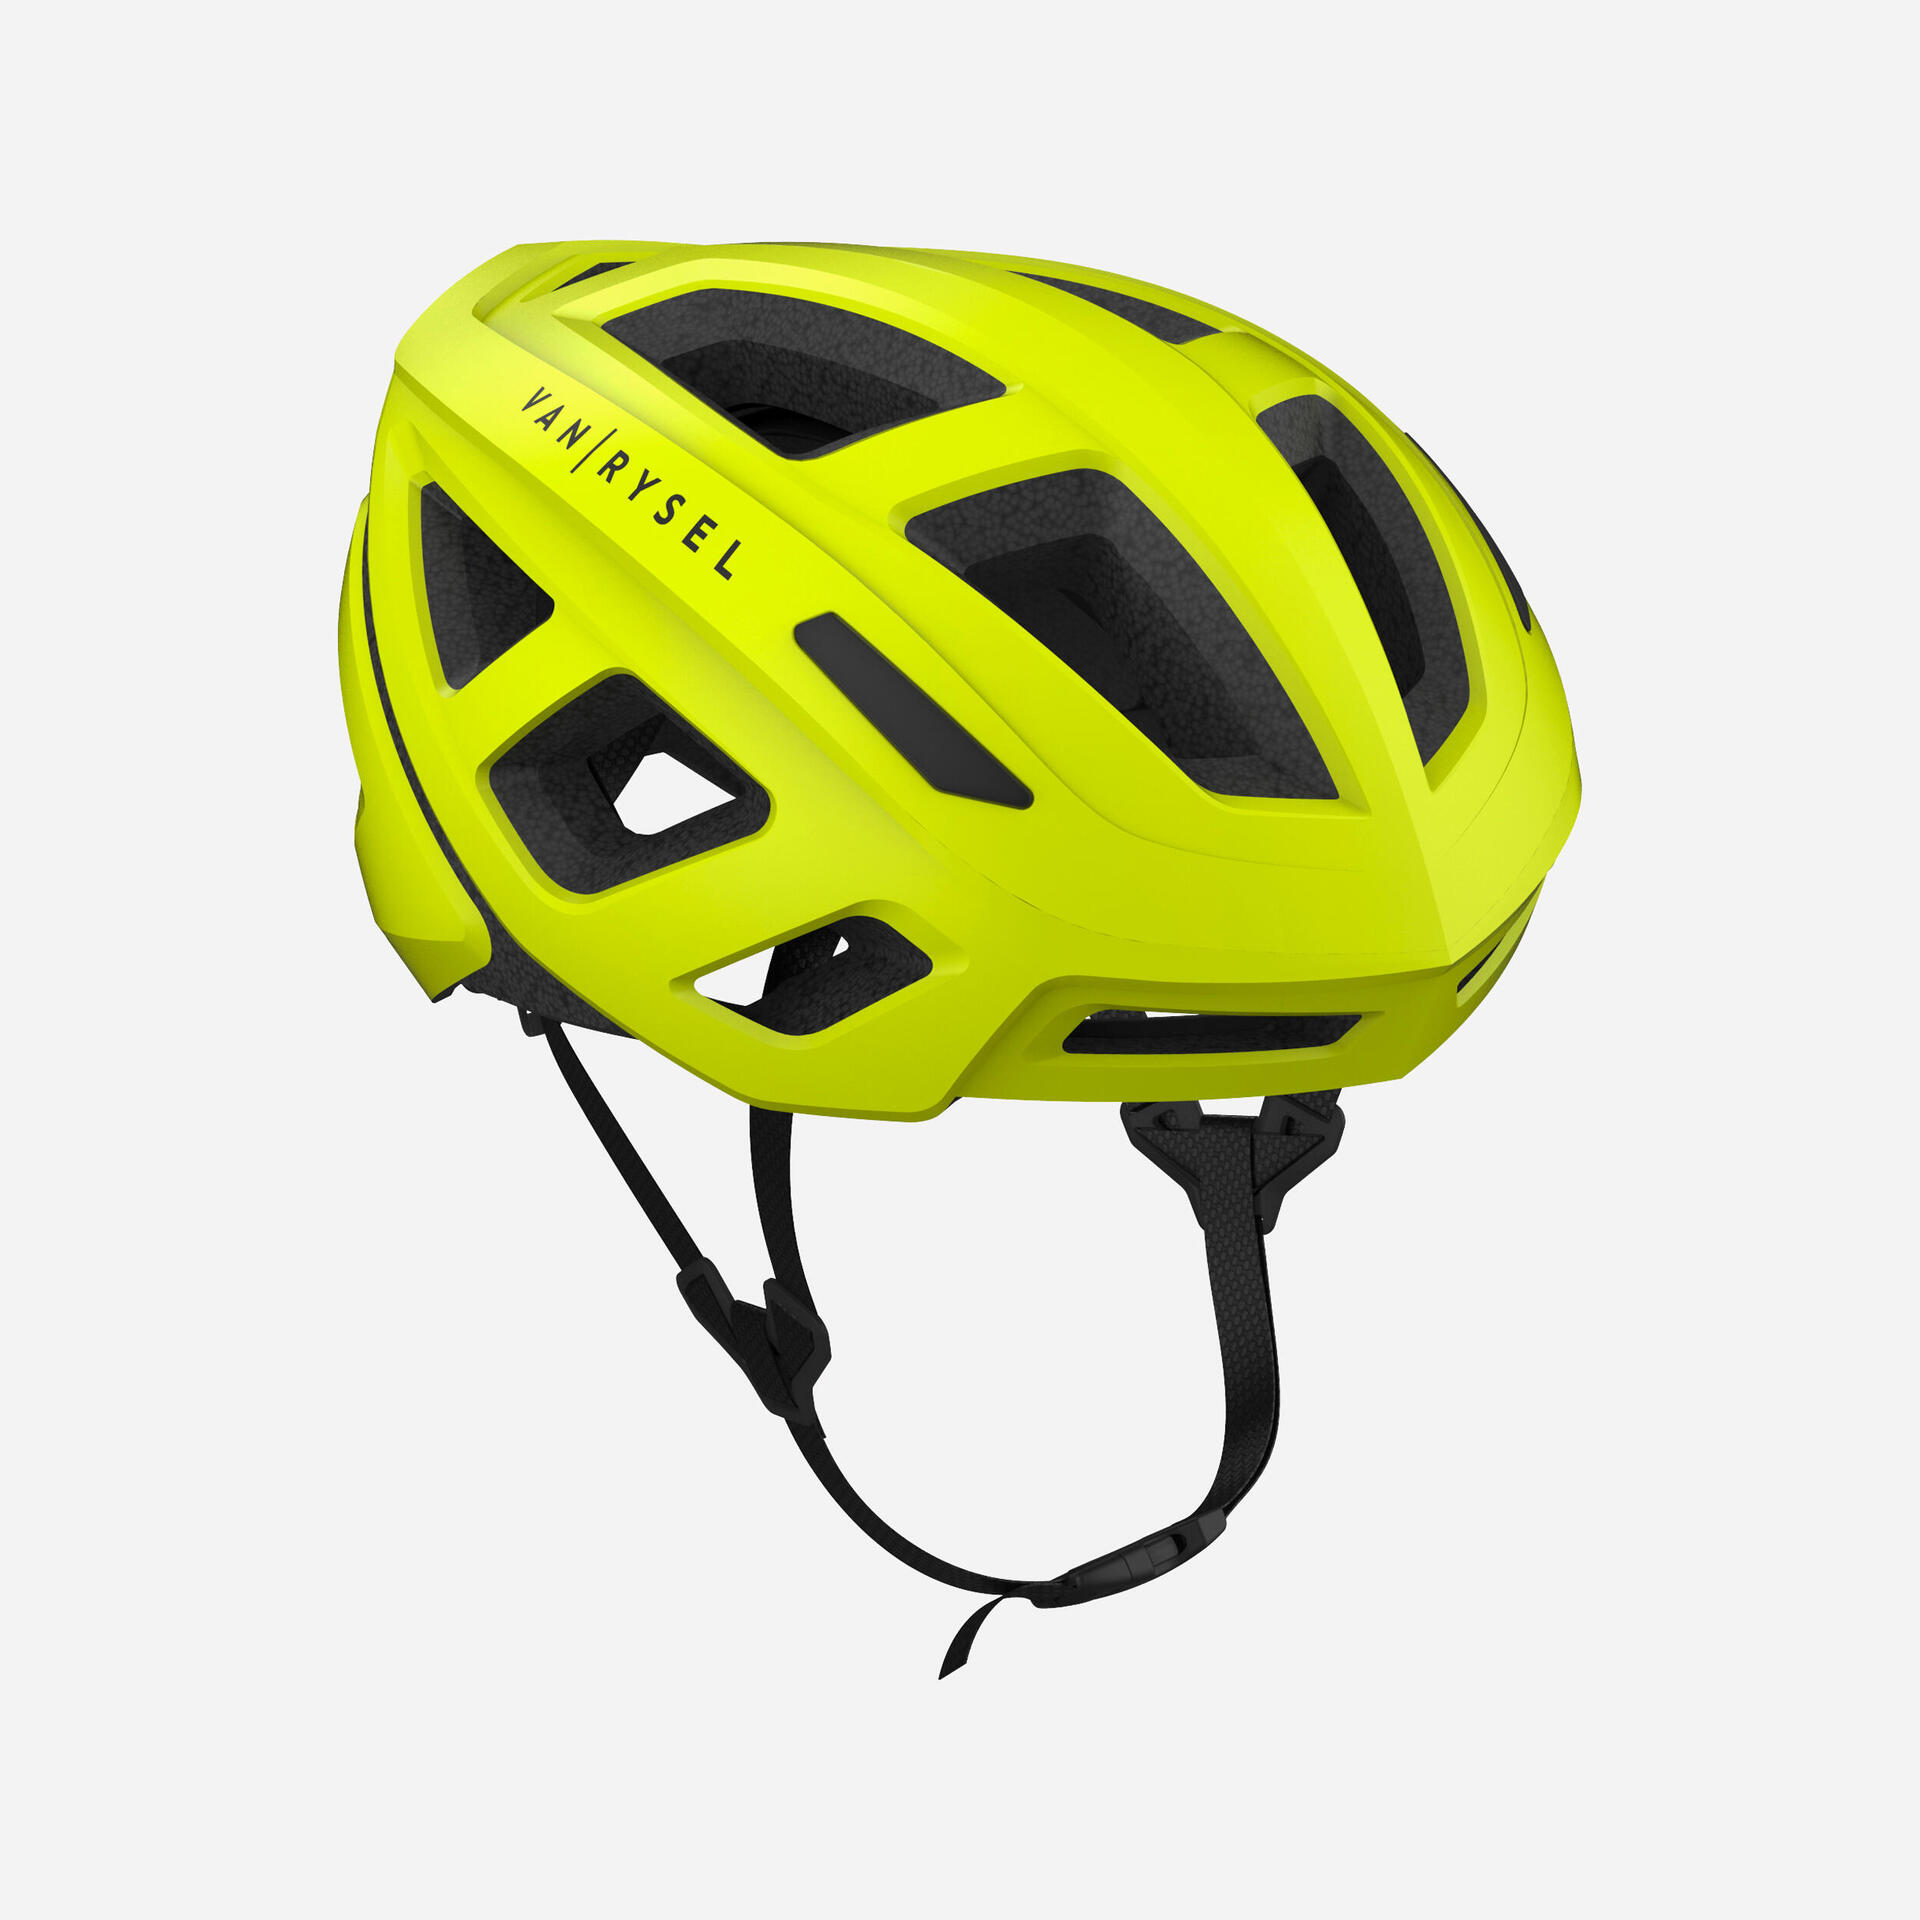 How To Choose Your Bike Helmet? 